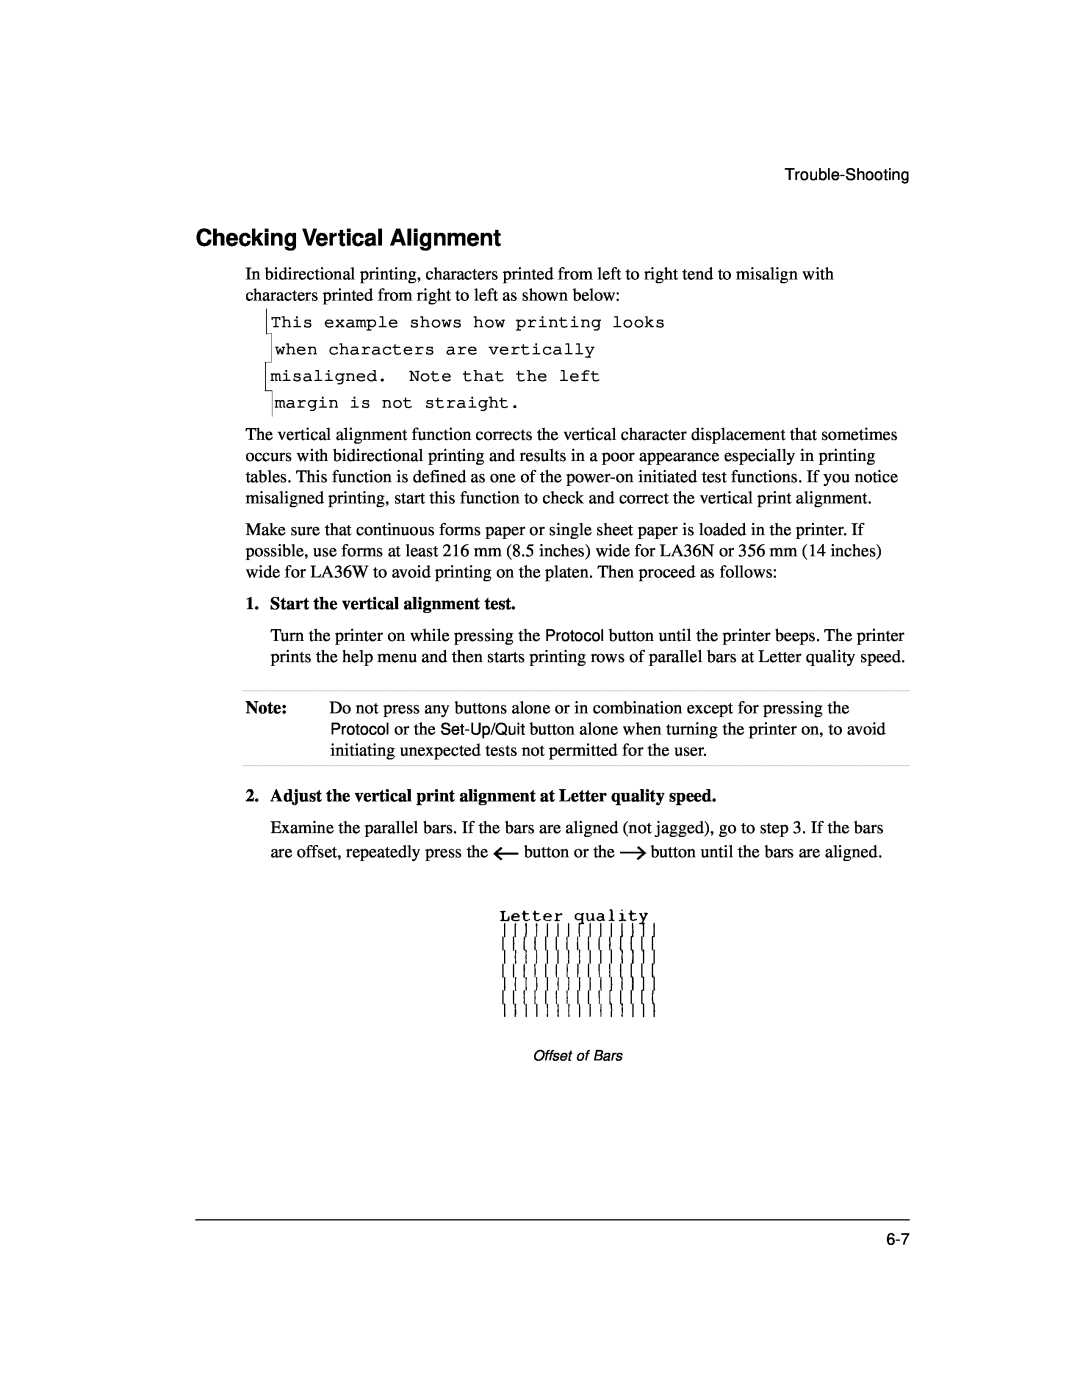 Genicom LA36 manual Checking Vertical Alignment, Start the vertical alignment test 